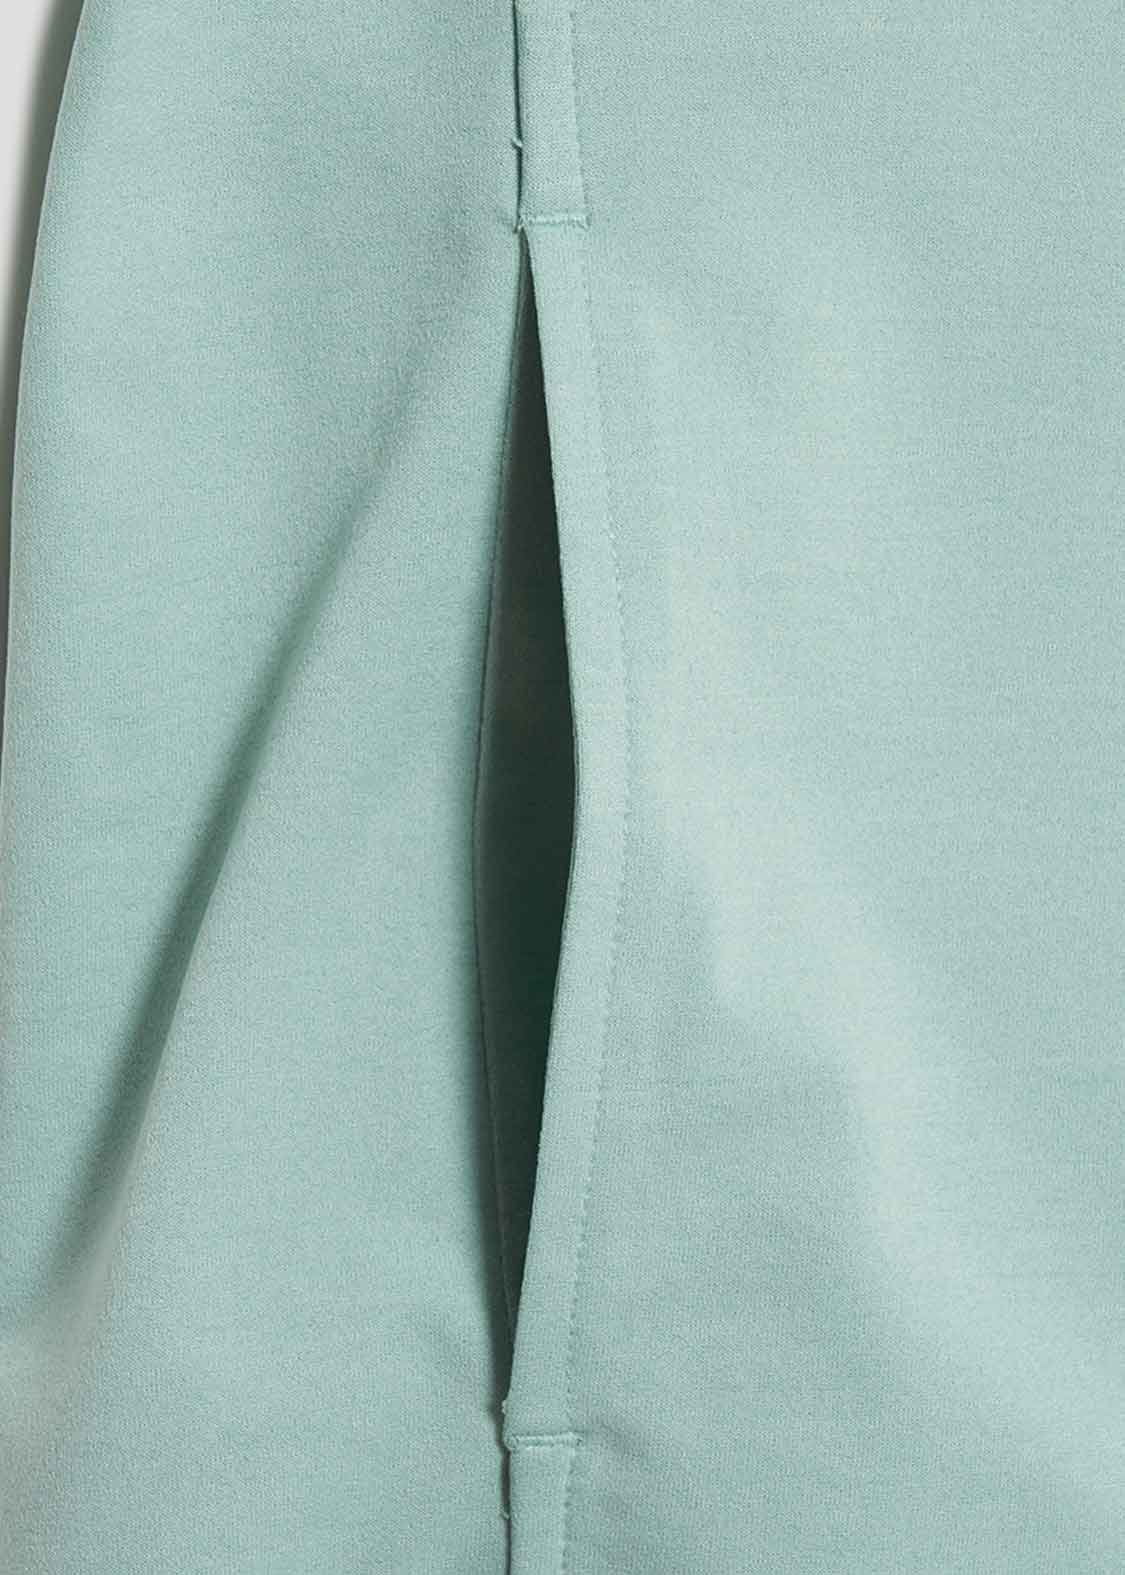 UV Dry long sleeve cardigan (Ikaku)